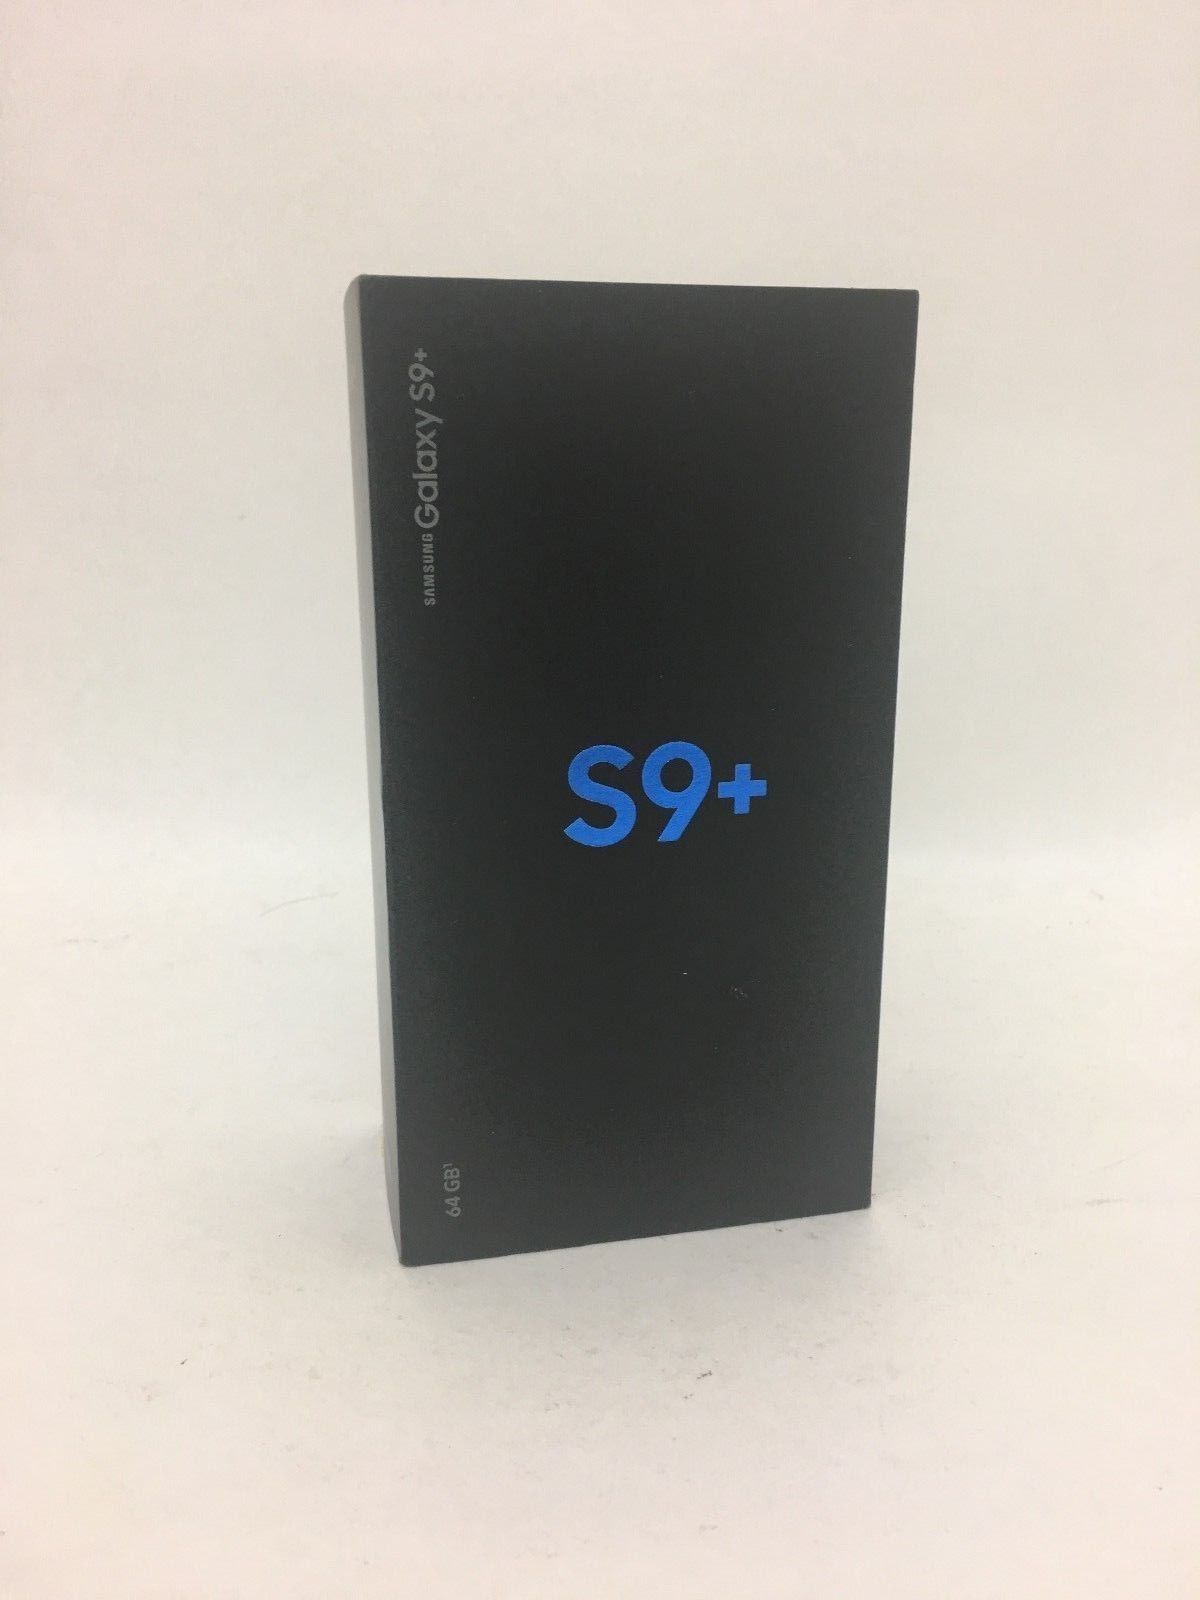 SAMSUNG GALAXY S9+ 64GB - FACTORY UNLOCKED - BRAND NEW SEALED IN BOX